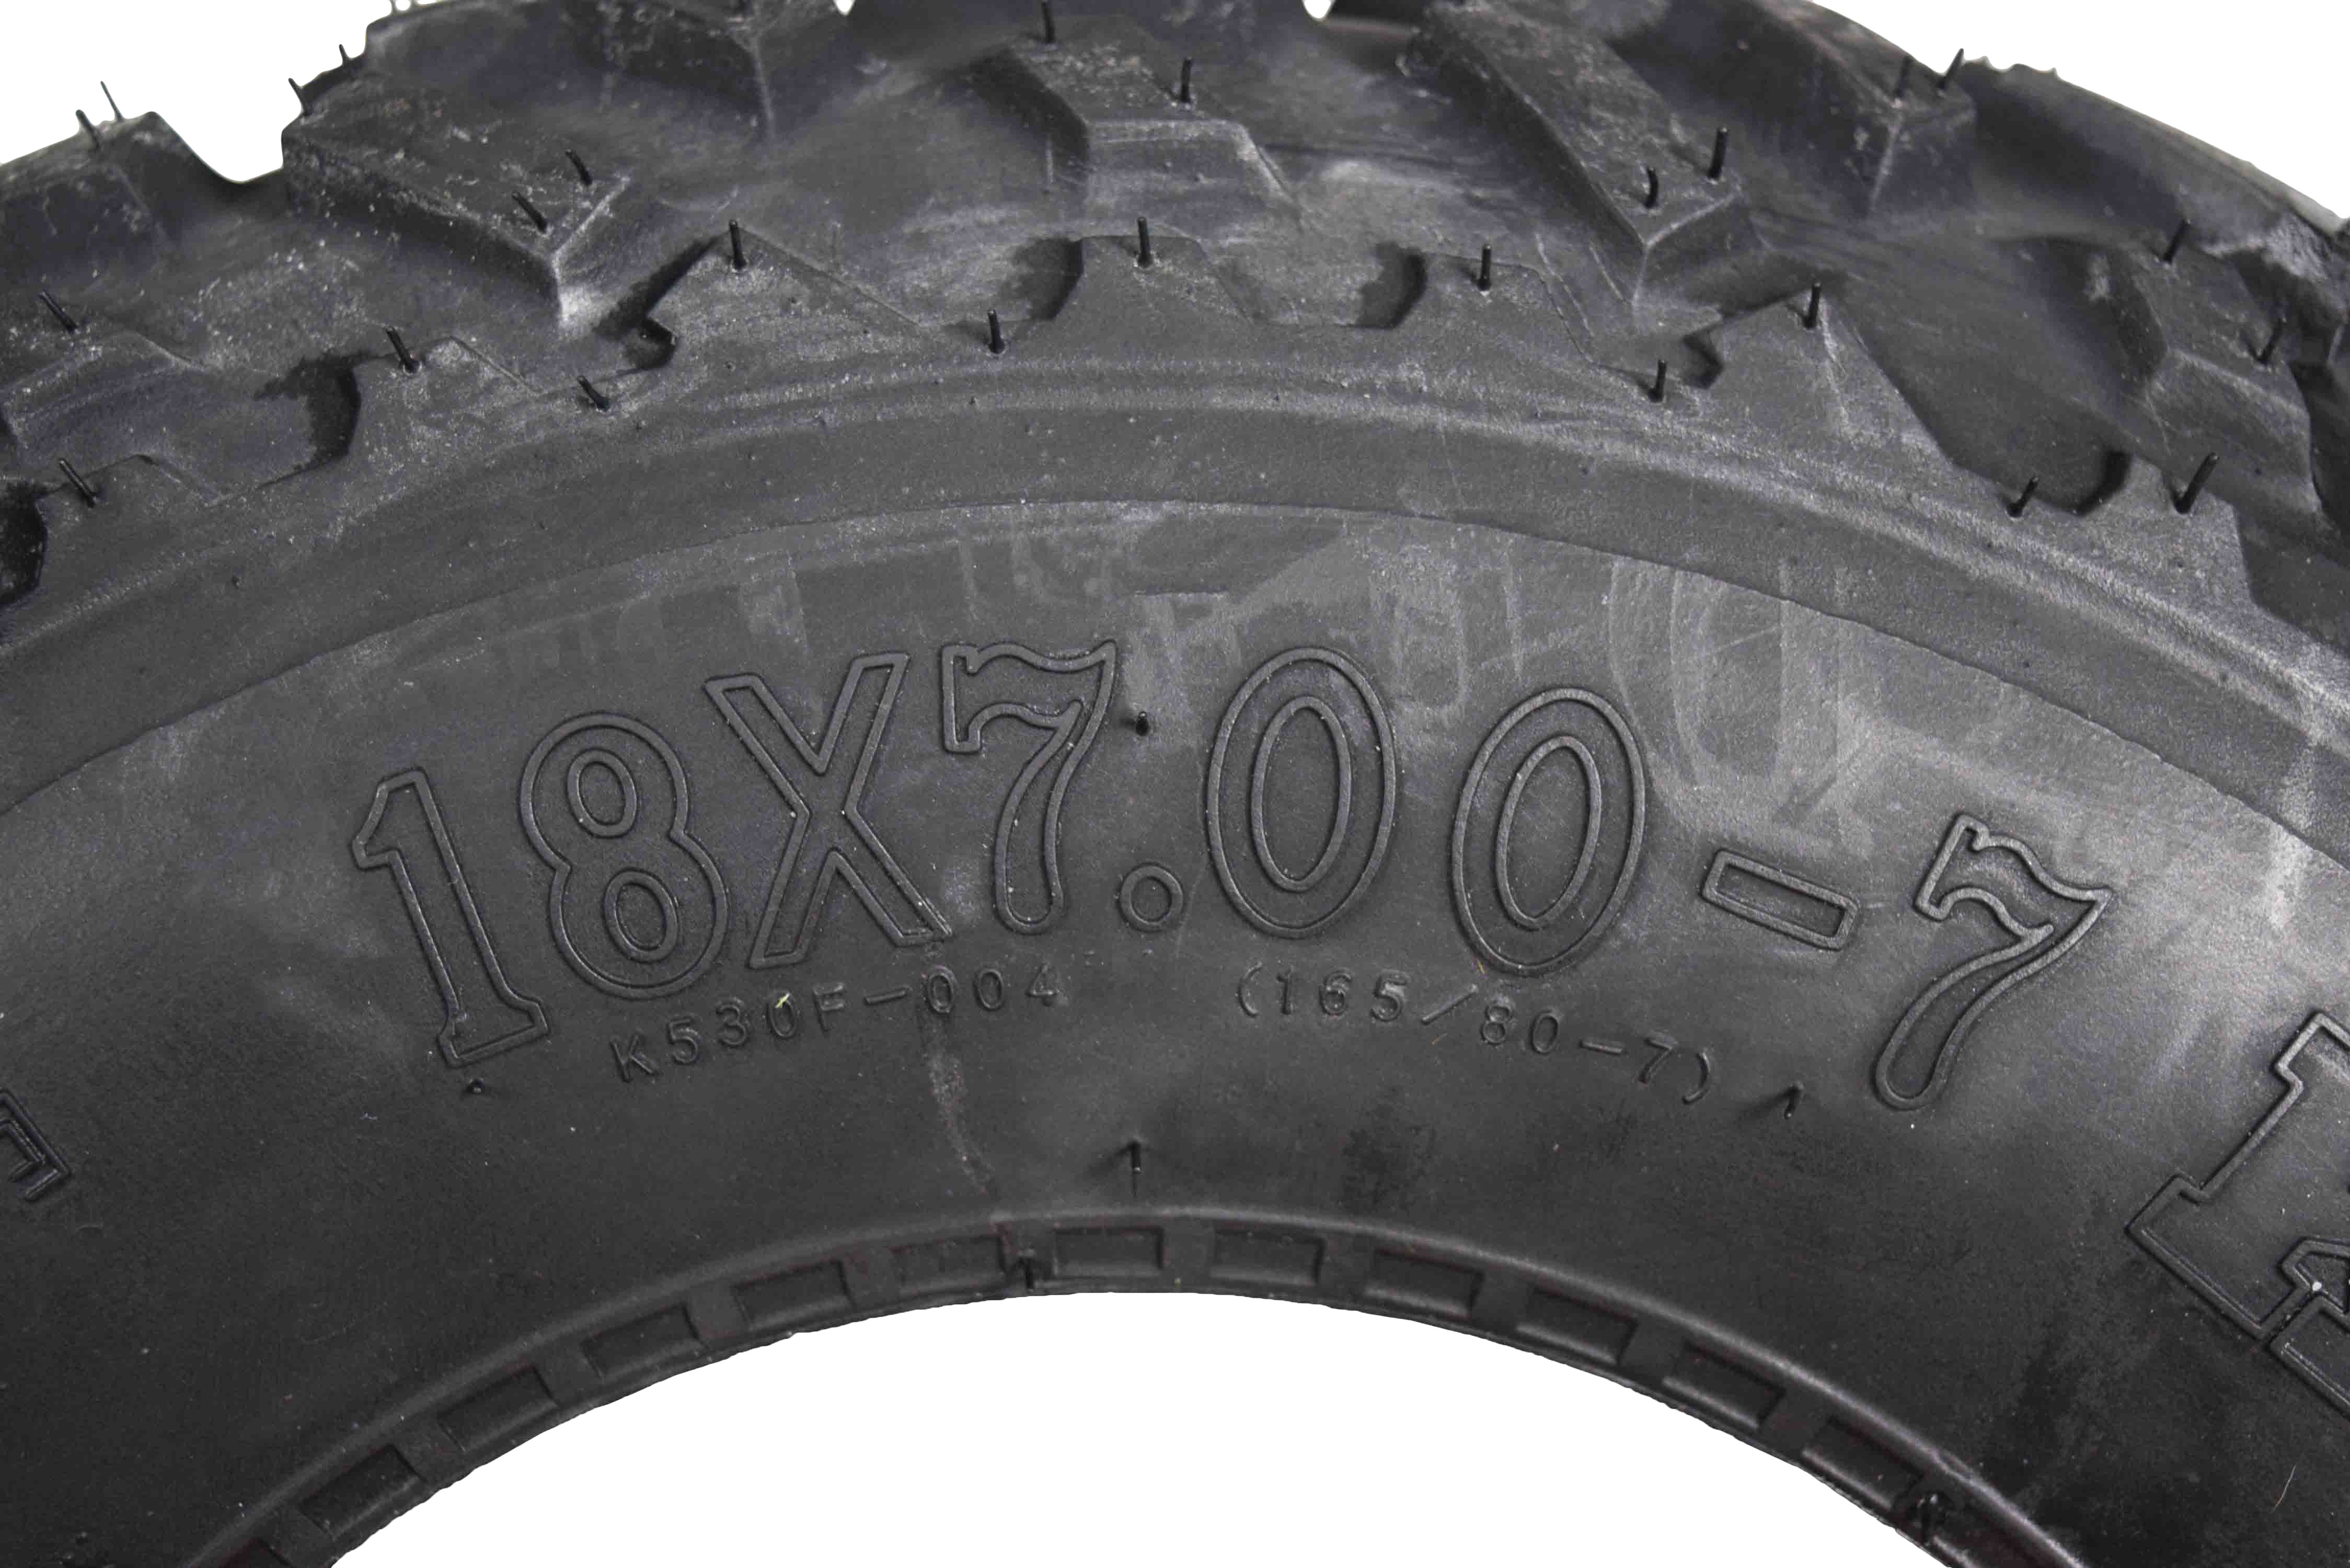 Kenda Pathfinder 18x7-7 2 PLY OEM Replacement Tire 18x7x7 K530 Single Tire